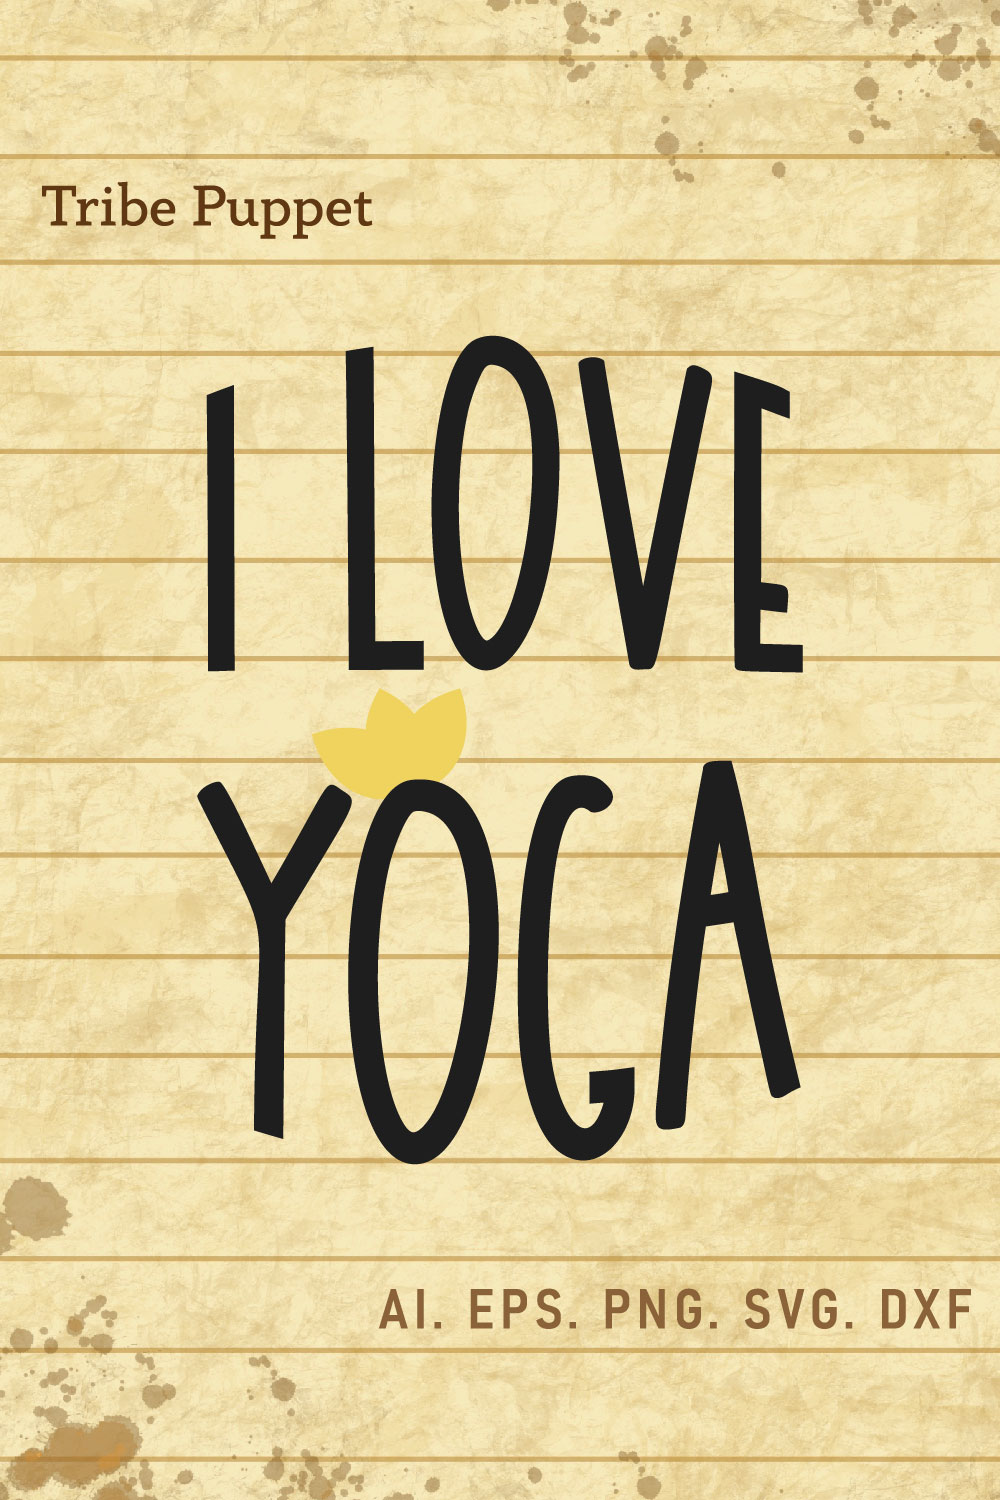 Yoga SVG pinterest preview image.